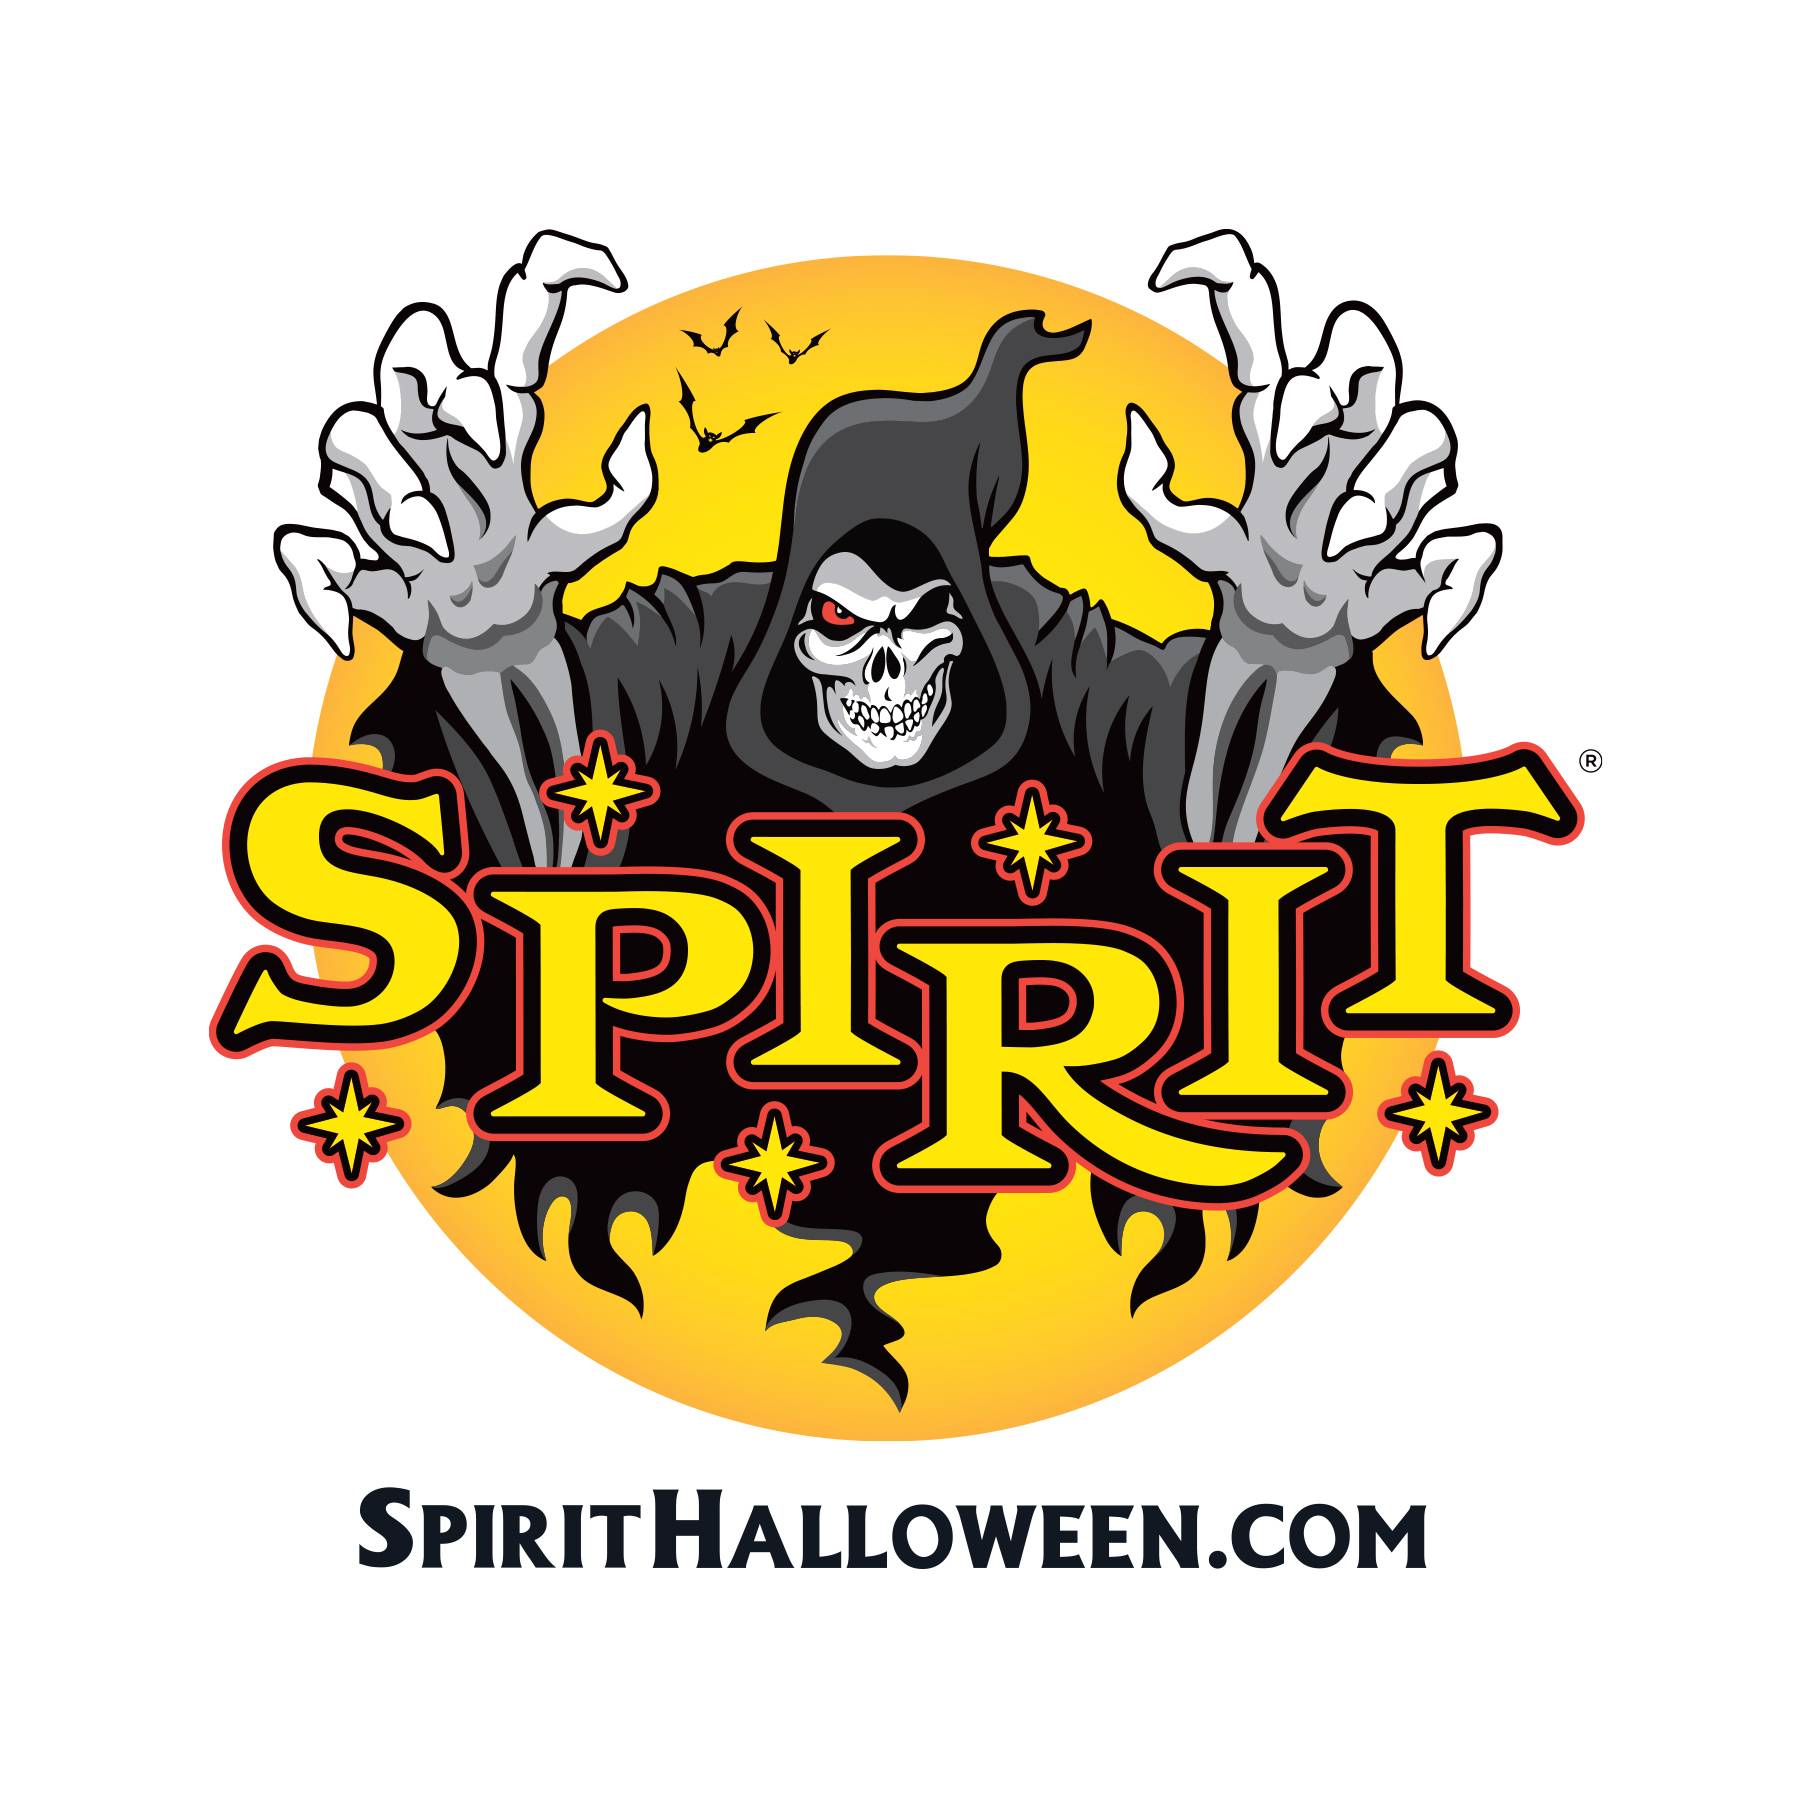 Spirit Halloween Coupons & Promo Codes